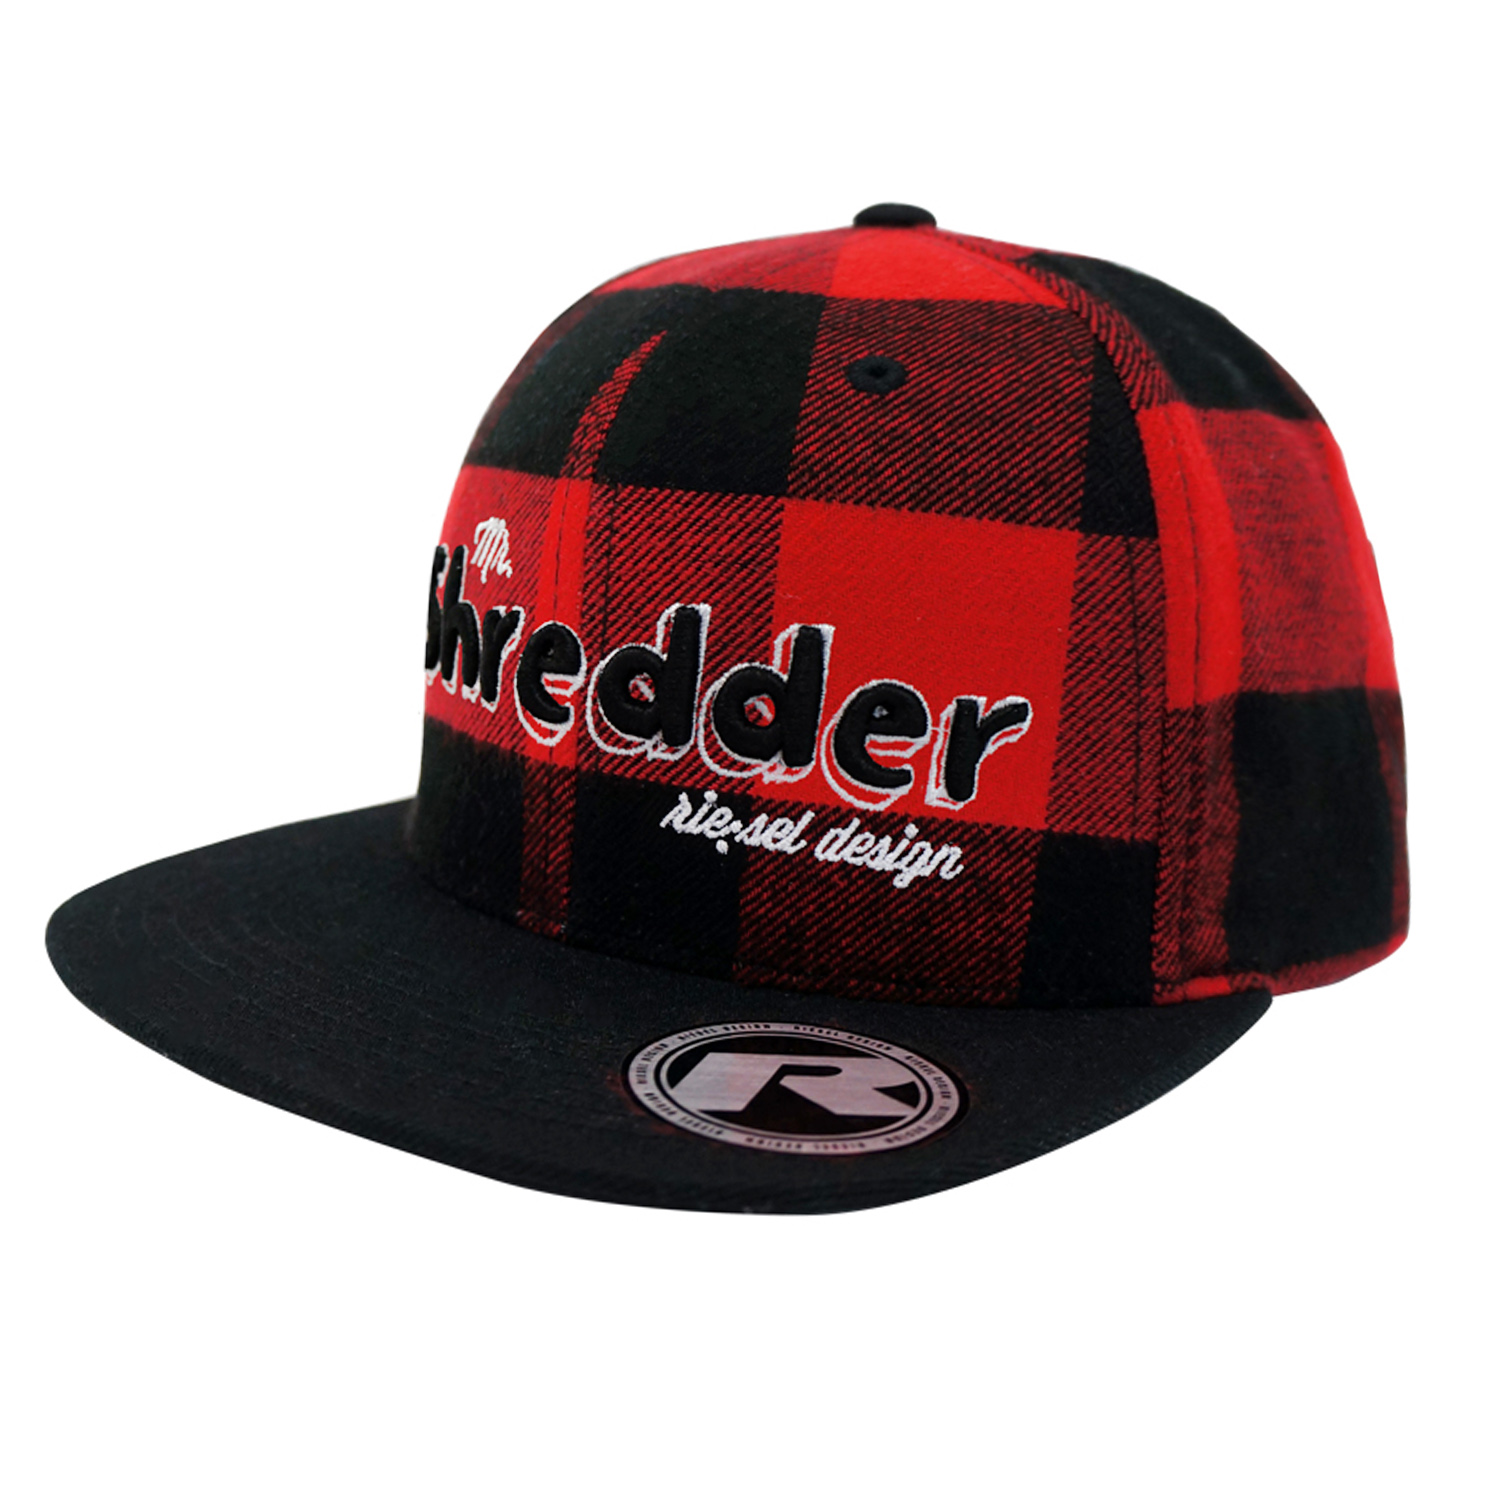 Riesel Design Snapback Cap The Crown Mr. Shredder